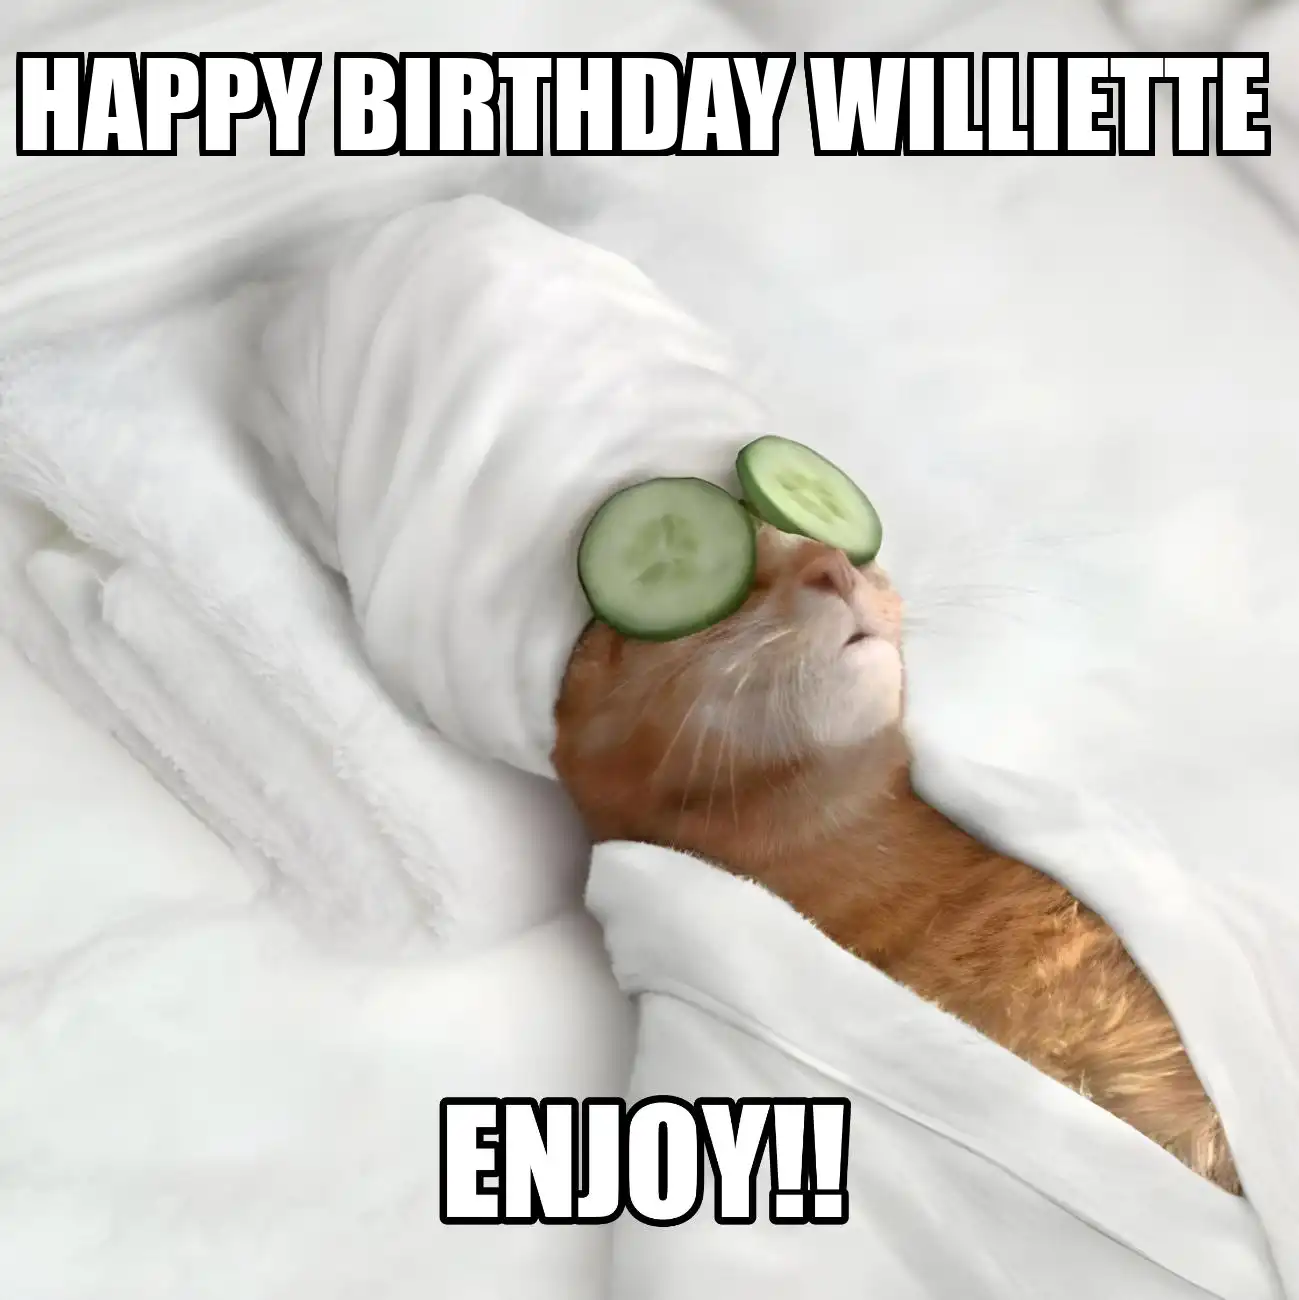 Happy Birthday Williette Enjoy Cat Meme